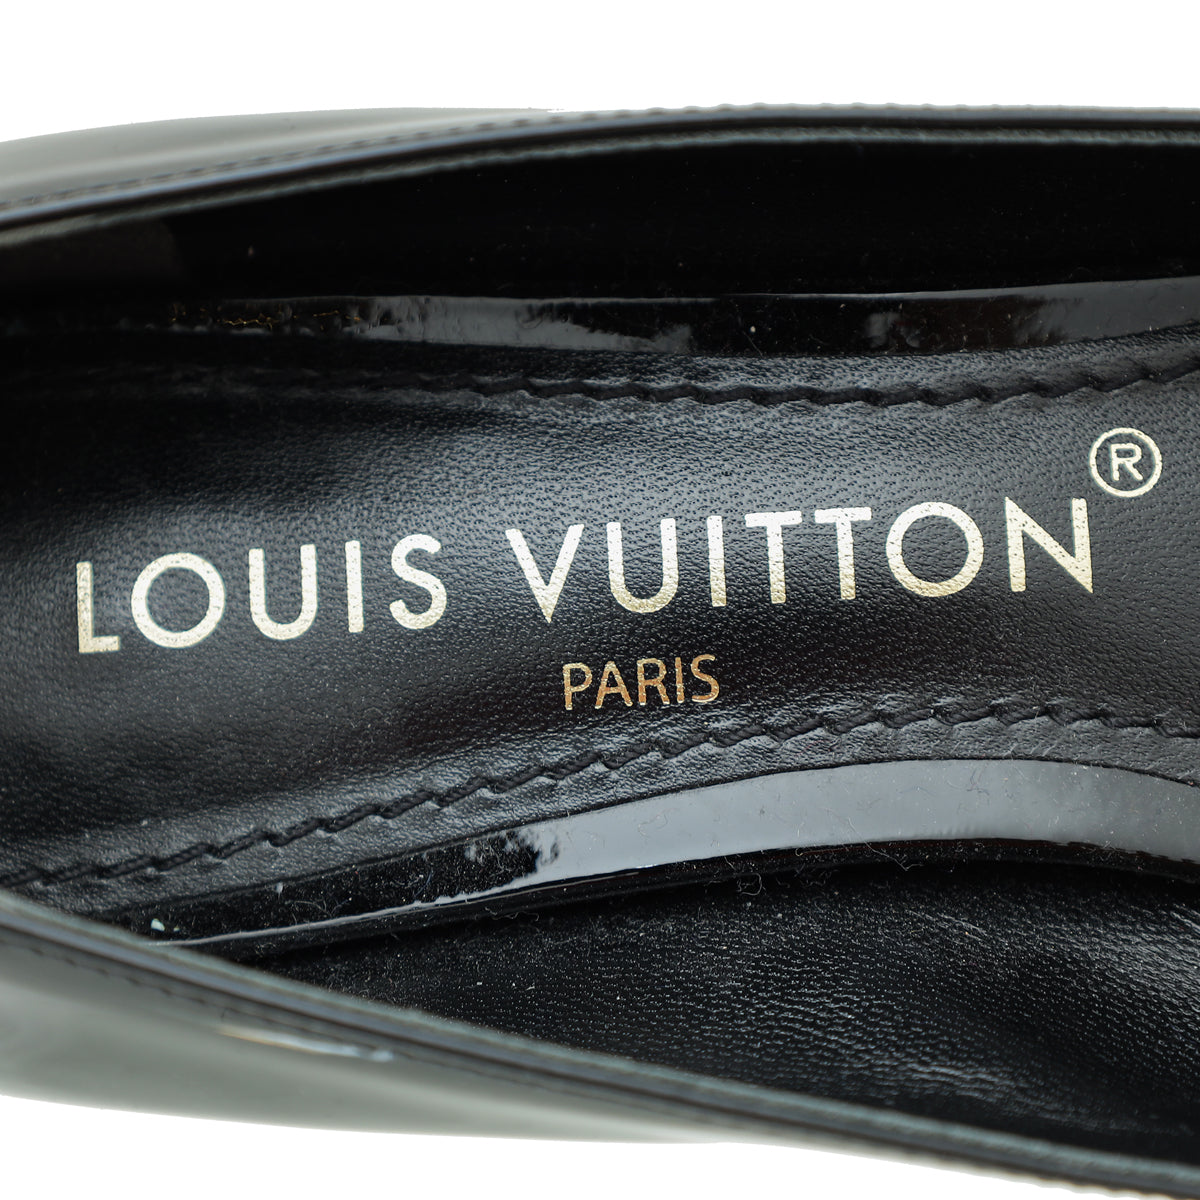 LOUIS VUITTON Shake Pump 36.5 *New - Timeless Luxuries